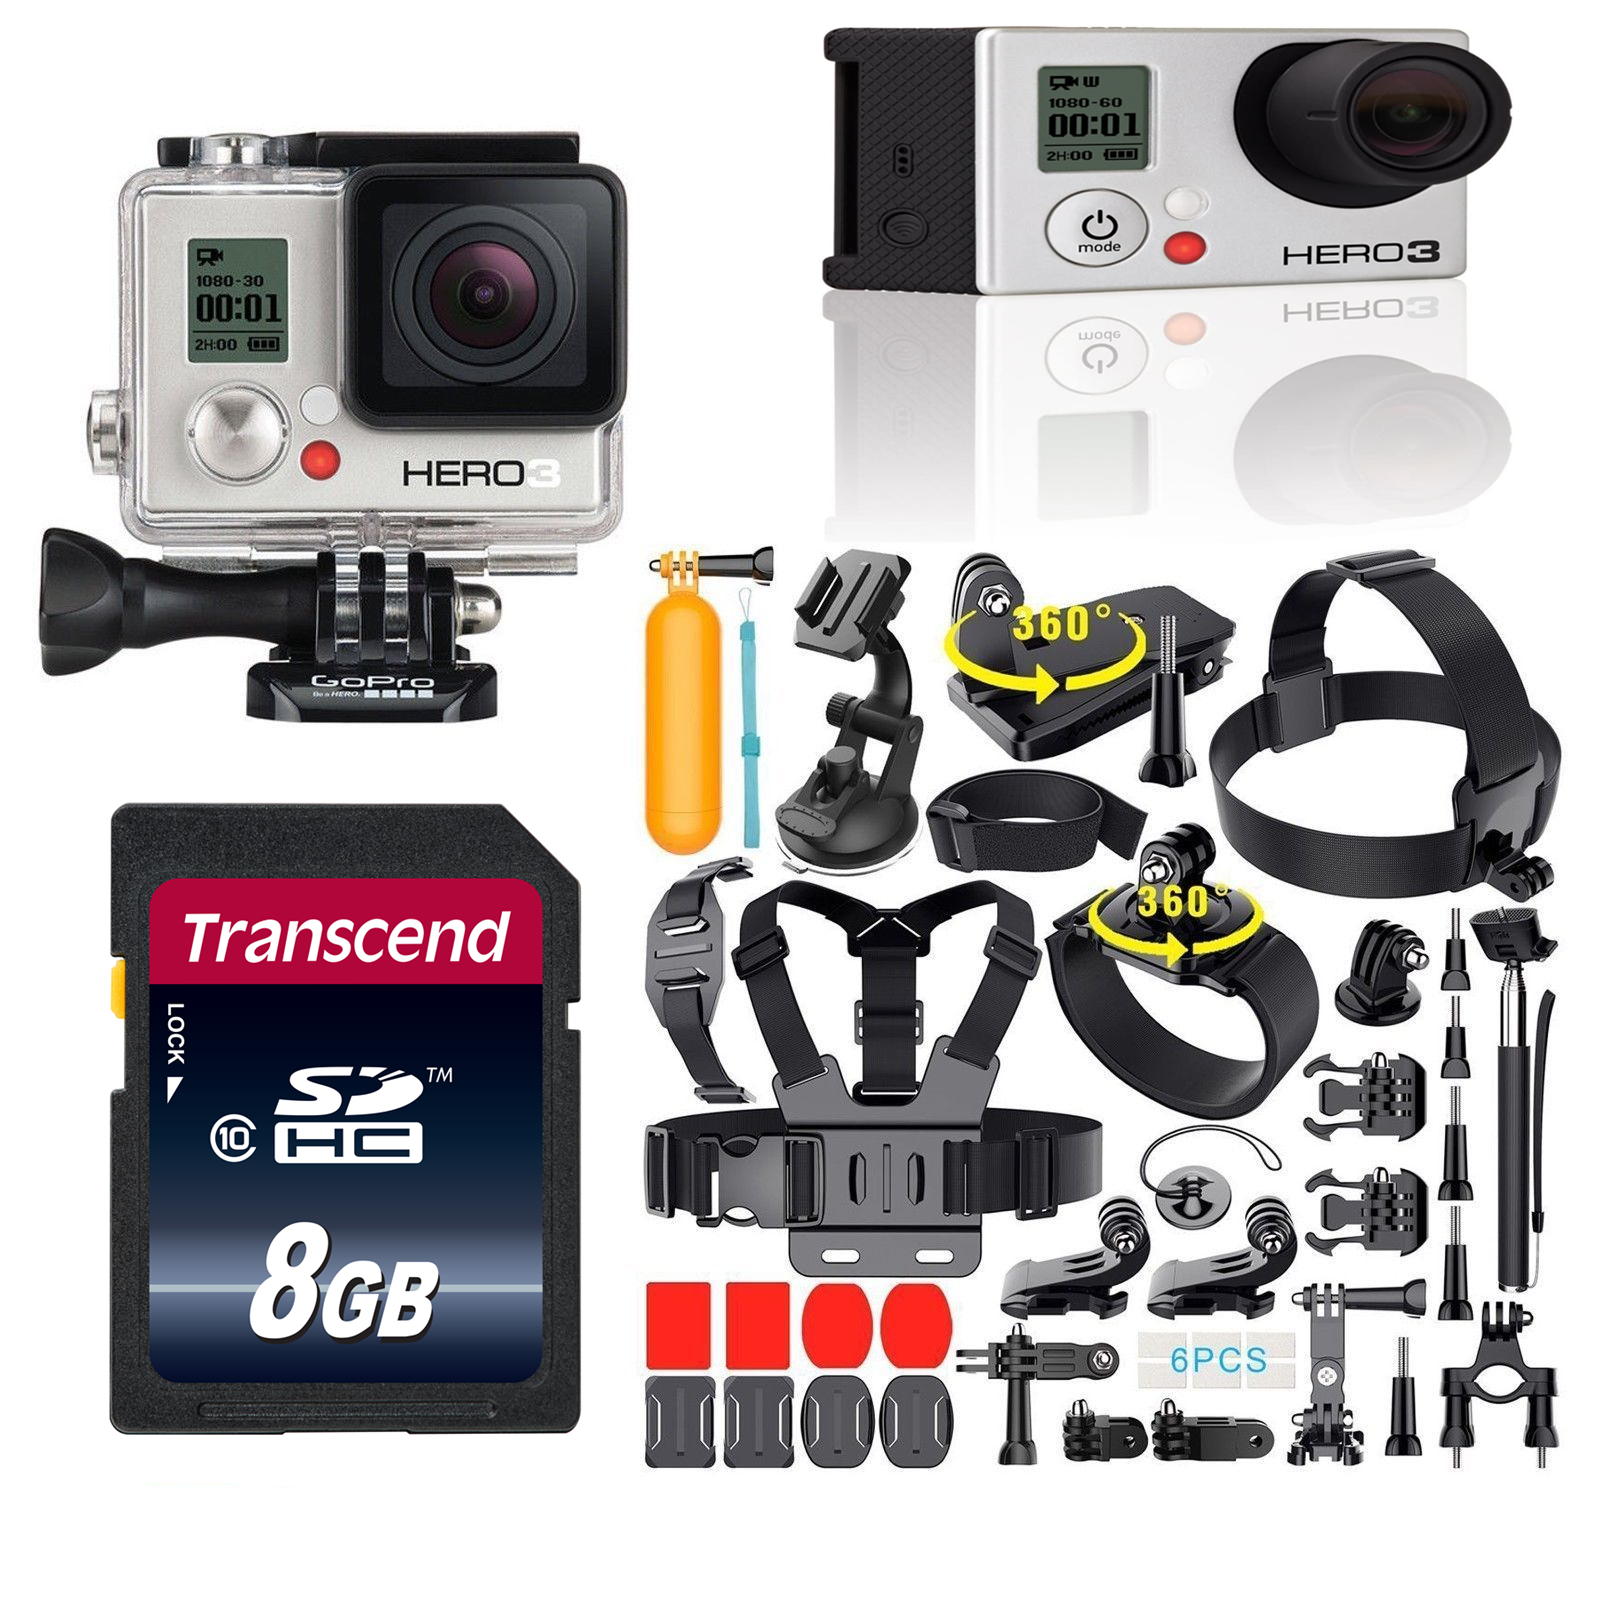 GoPro Hero3 Black Edition HERO3 CHDHX-301 + 35-in-1 GoPro Action Camera Accessories Kit - image 1 of 8